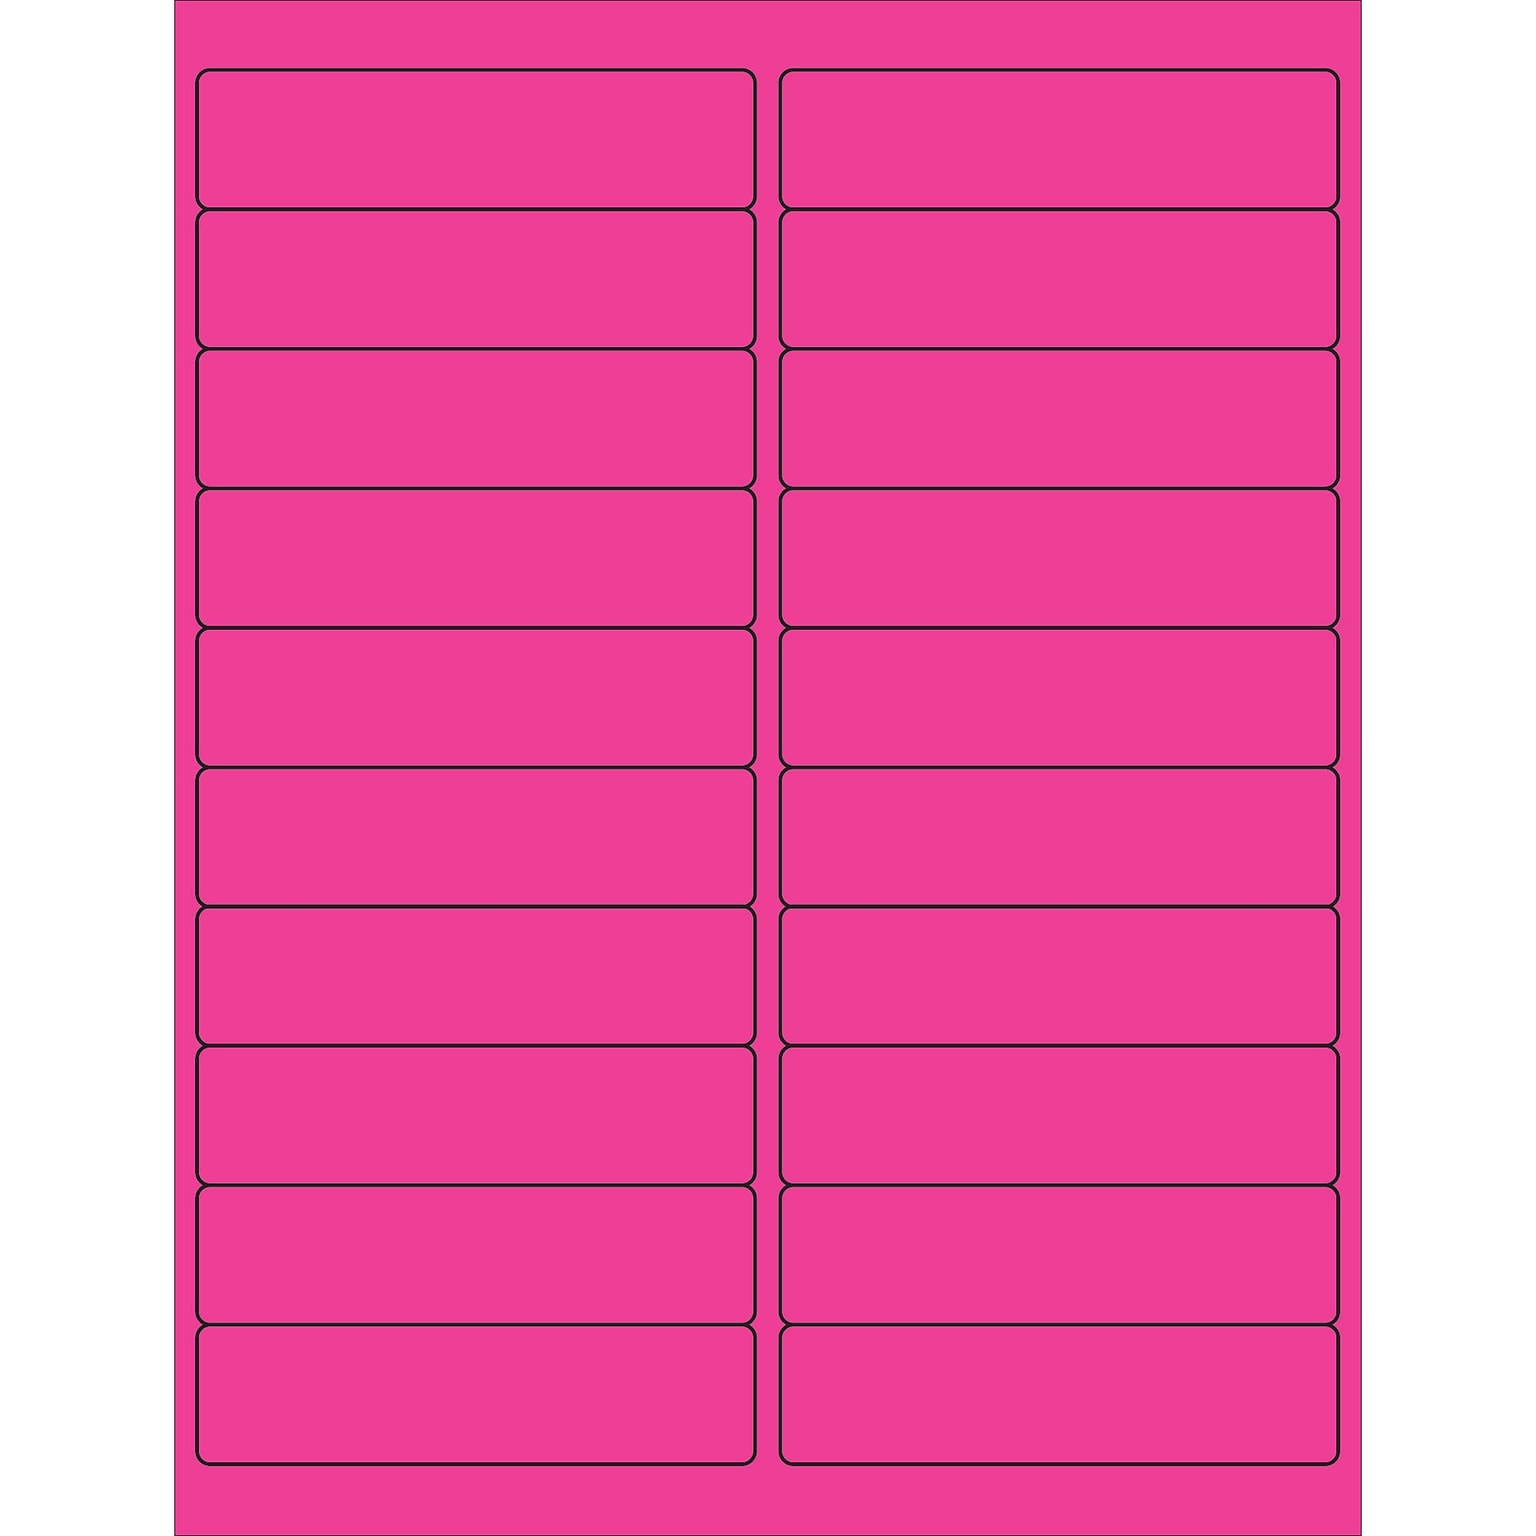 Tape Logic® Rectangle Laser Labels, 4 x 1, Fluorescent Pink, 2000/Case (LL177PK)